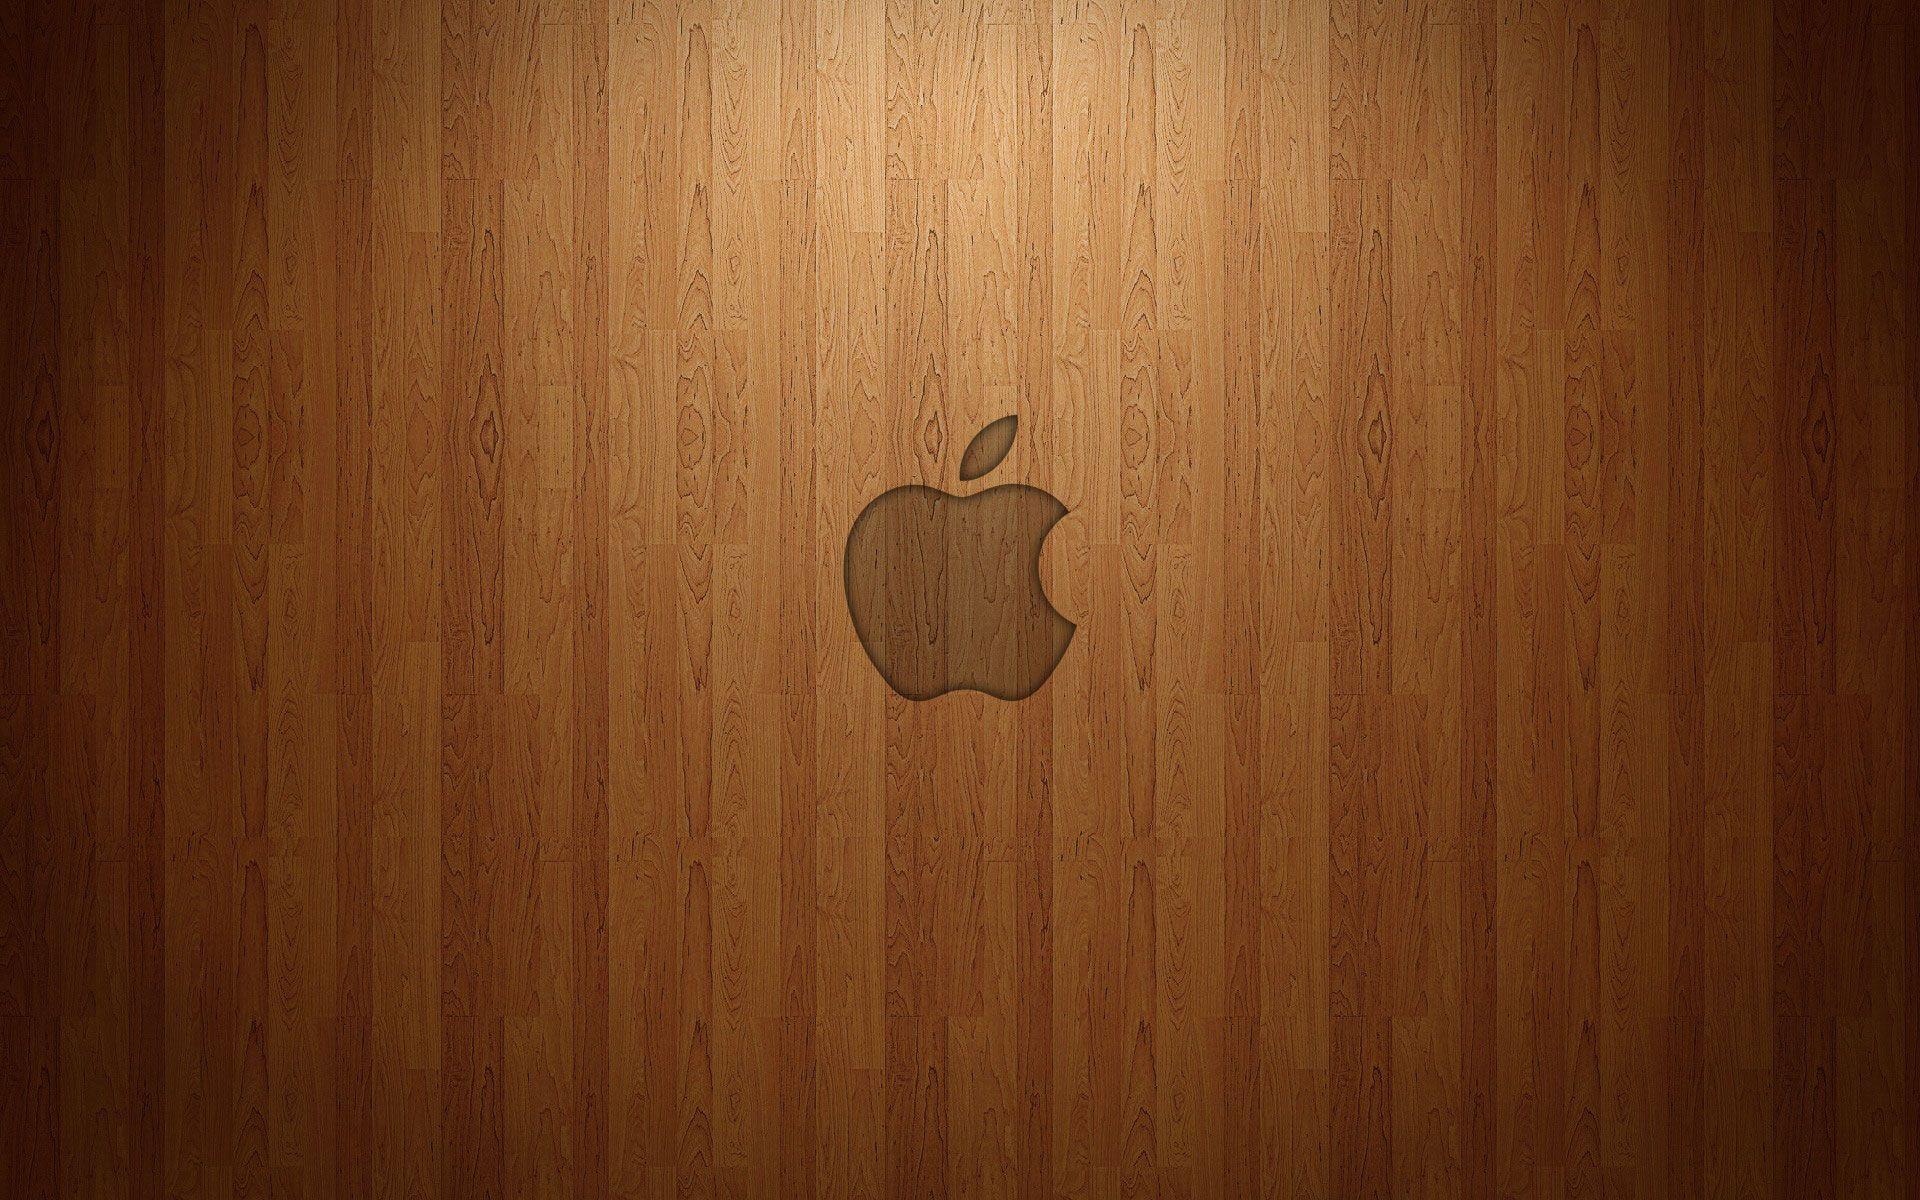 Wooden Apple Wallpapers - Wallpaper Cave